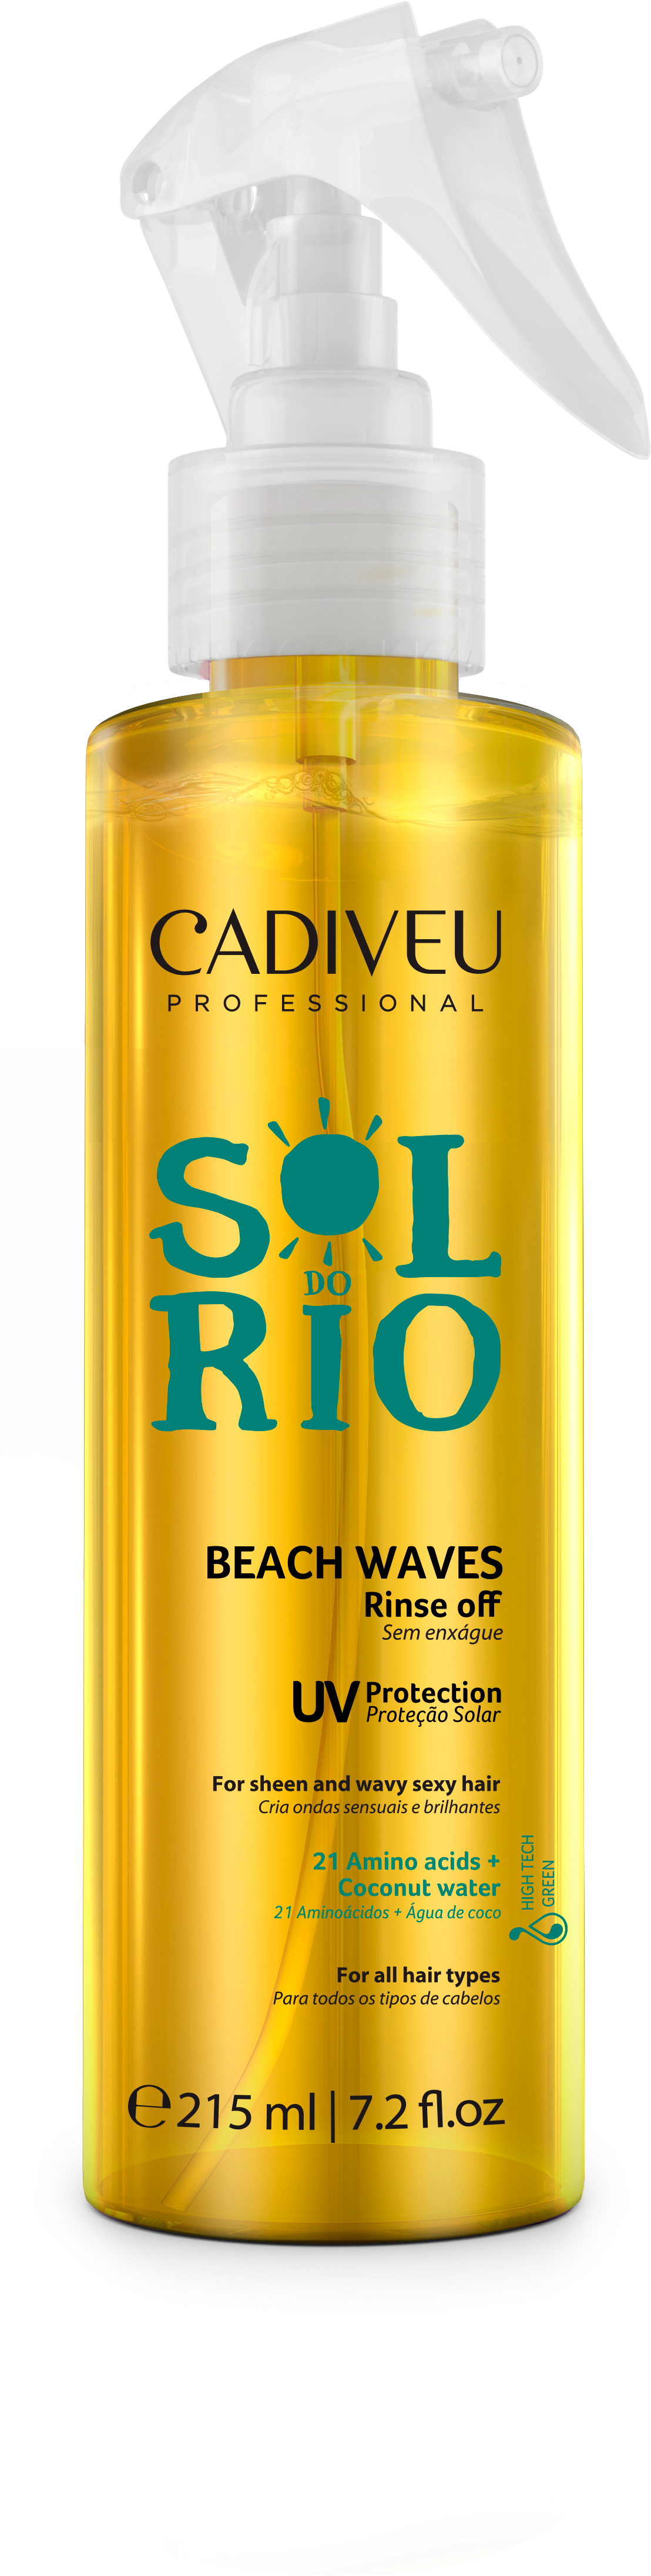 Beach Waves Spray - Sol Do Rio Cadiveu (5333x4708), Png Download